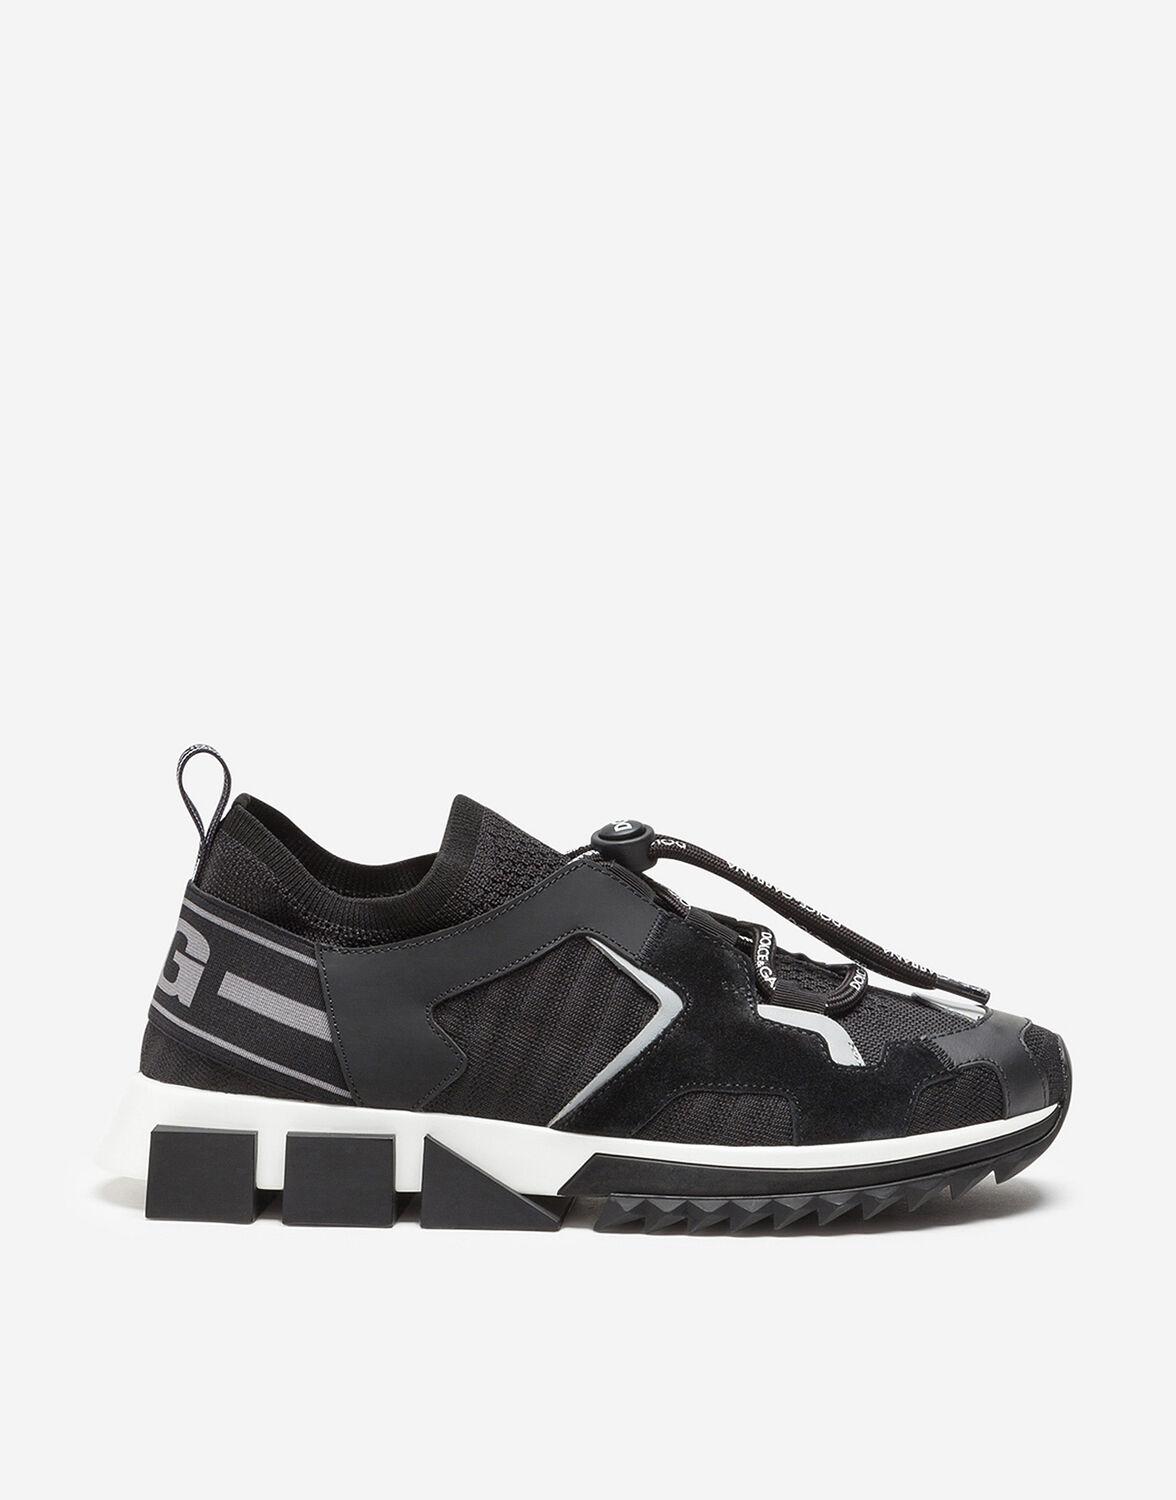 Dolce & Gabbana Sorrento Trekking Sneakers in Black - Lyst